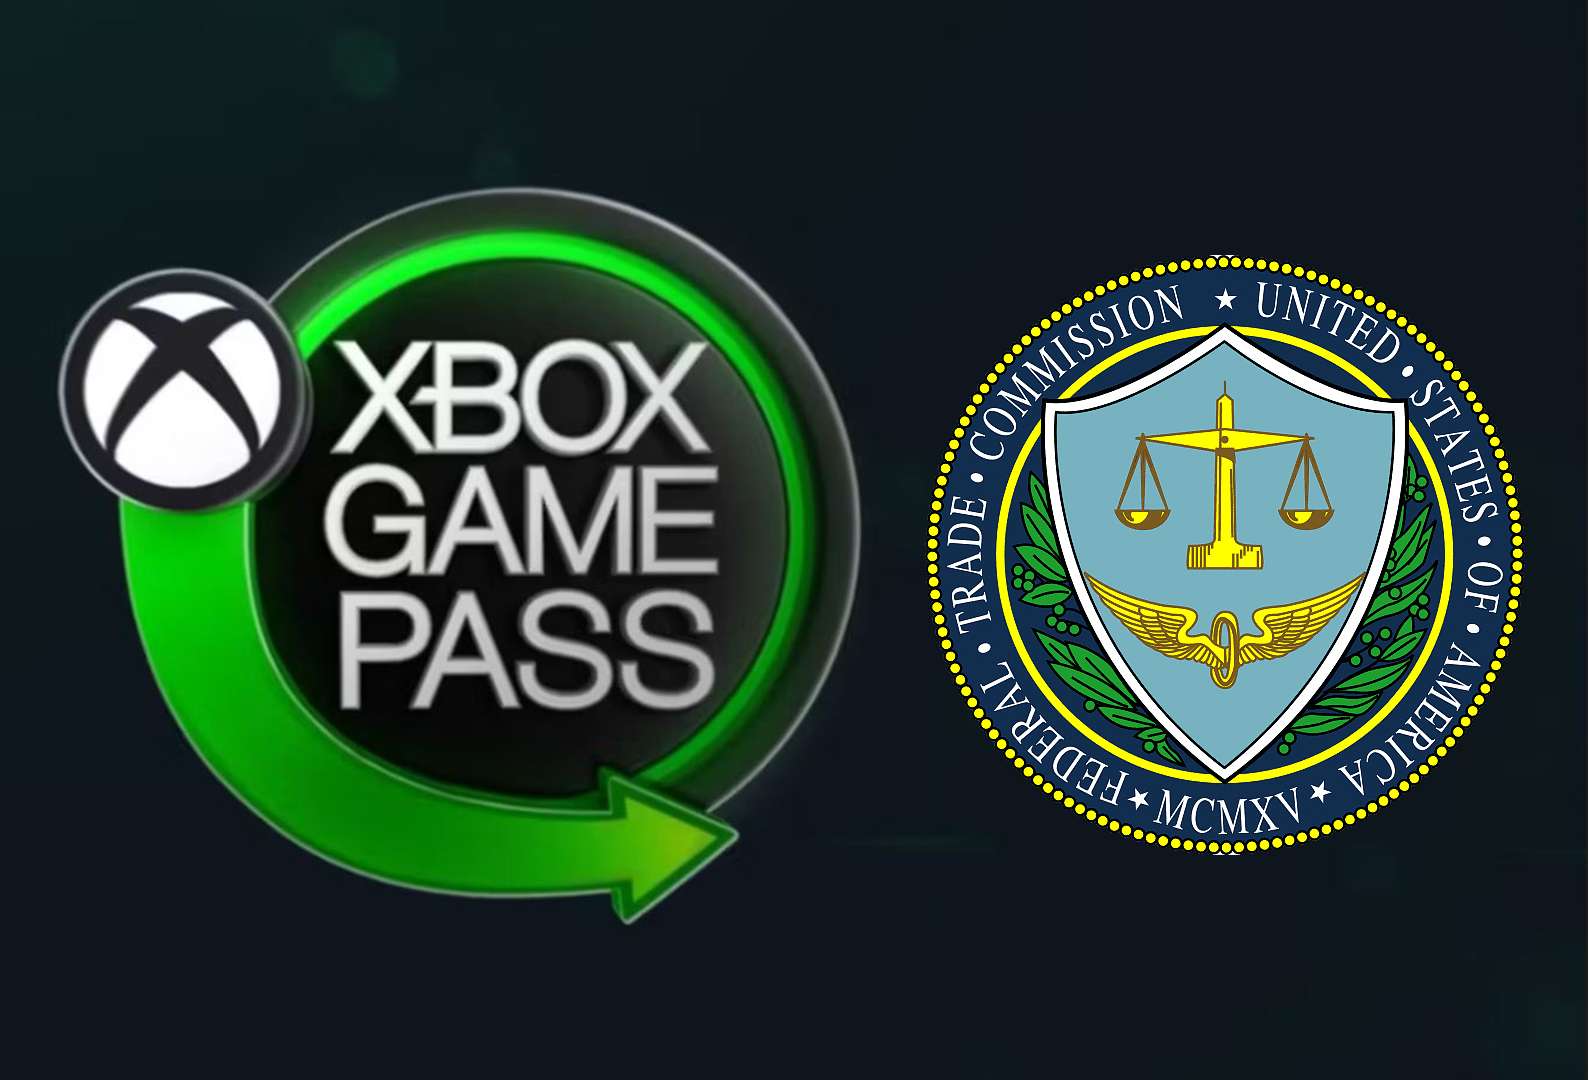 Microsoft Responds To FTC Allegation Regarding Xbox Game Pass Price Hike Bringing "Consumer Harm"